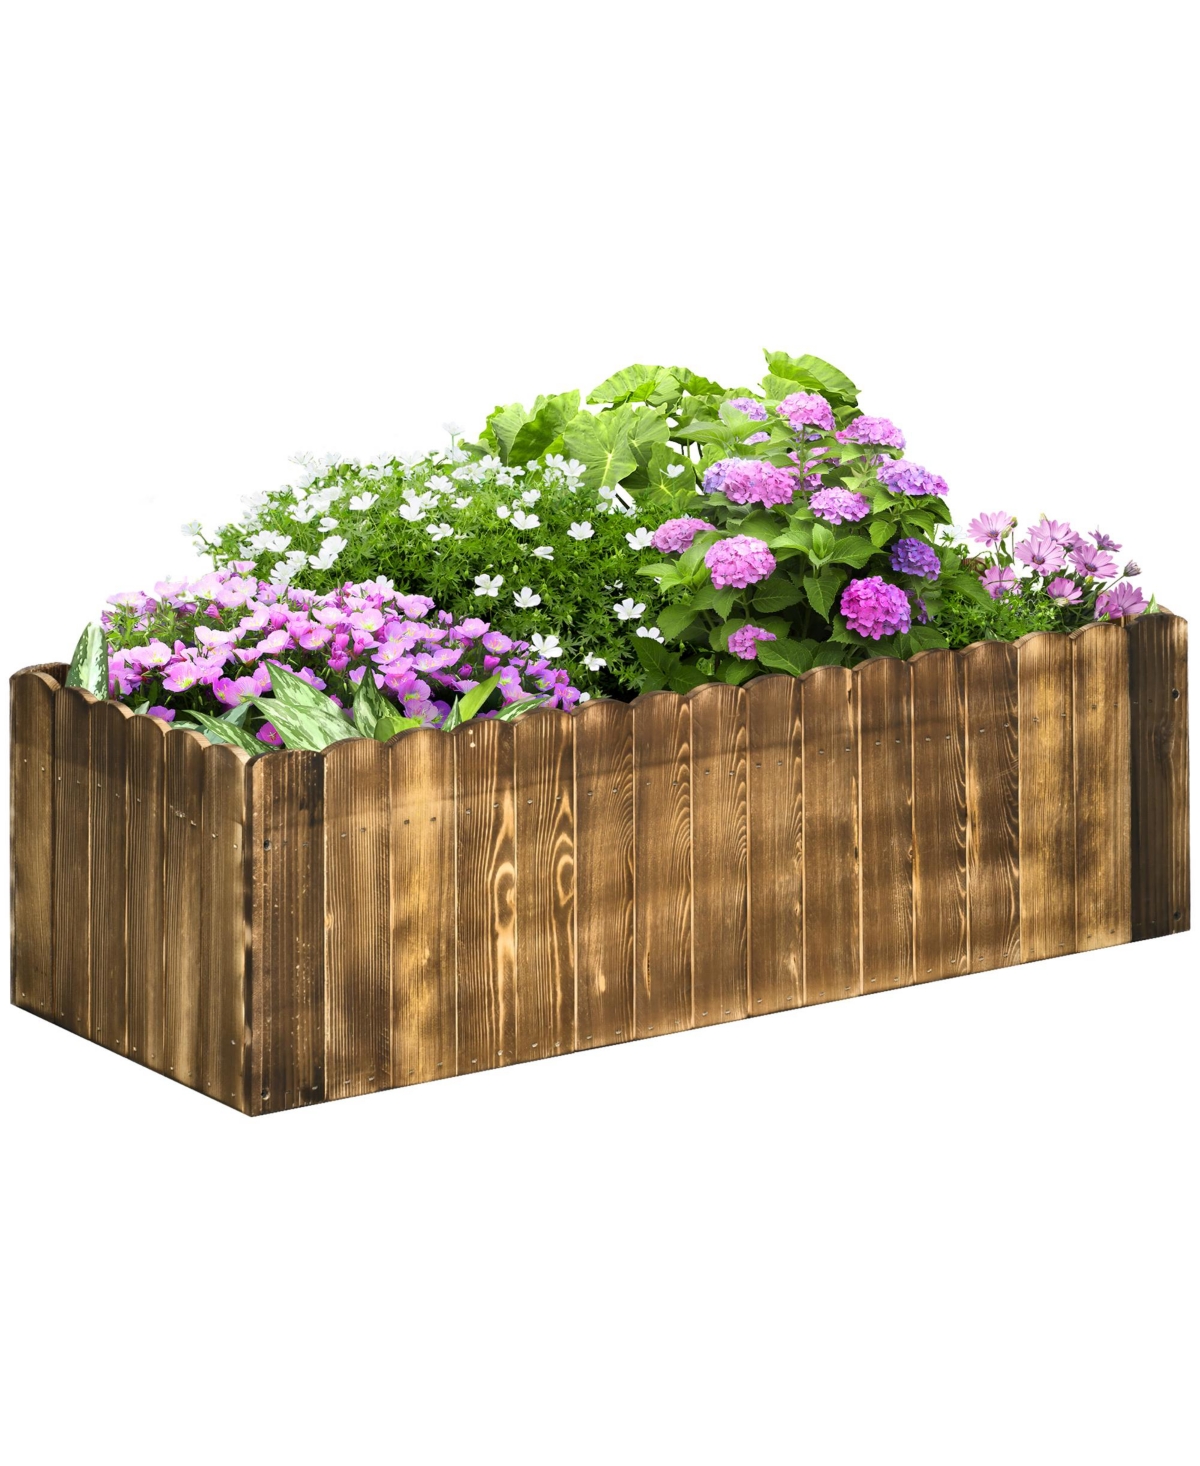 Wooden Raised Garden Flower Bed Backyard Elevated Planter Box - Brown